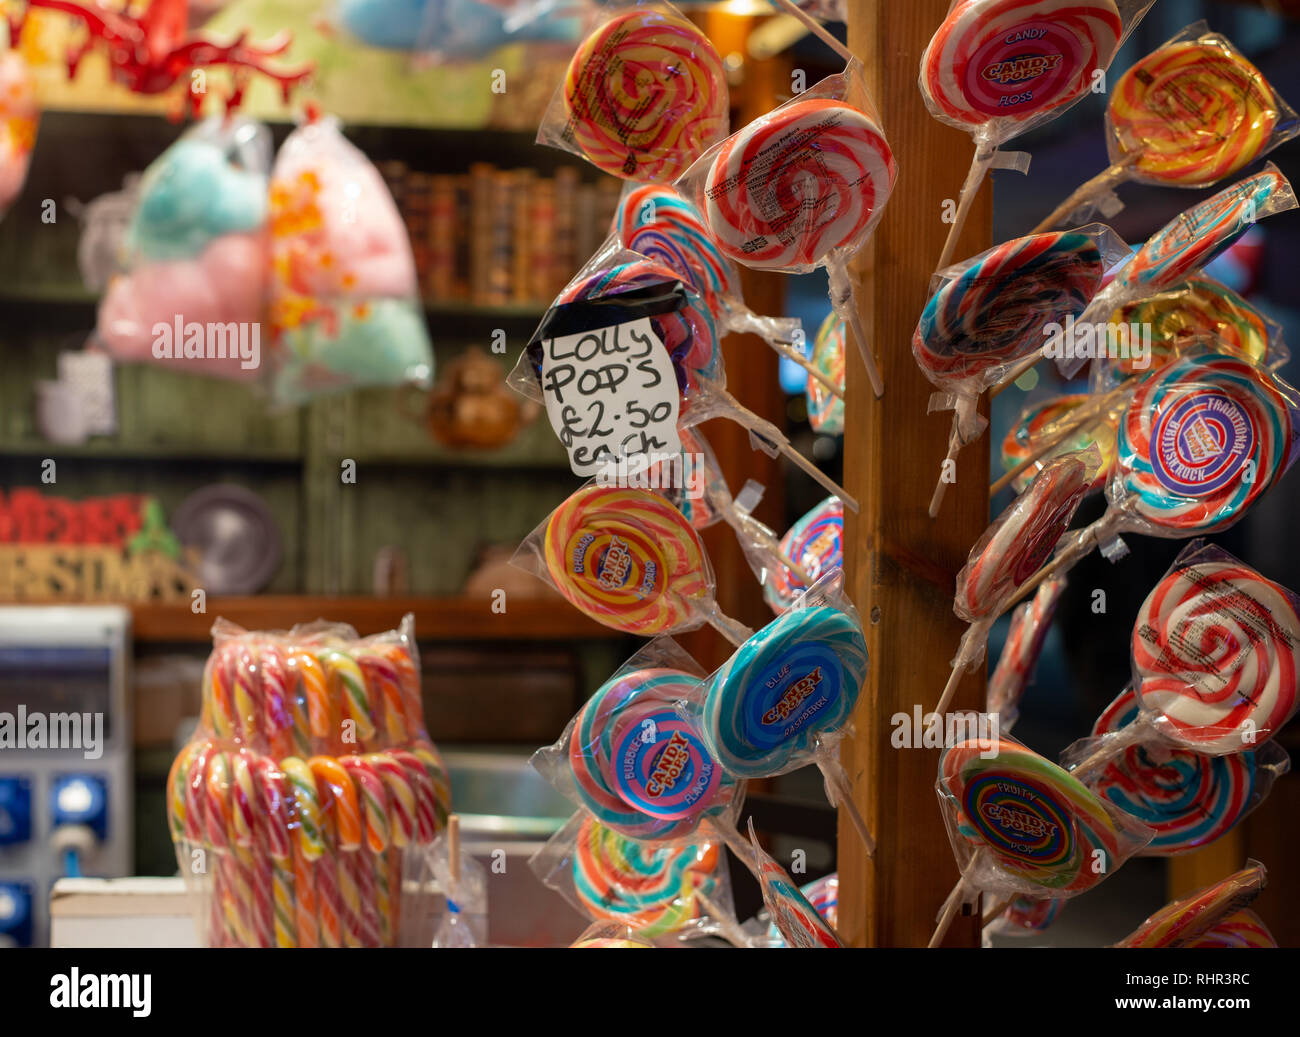 Lollypops à Noël market stall Banque D'Images